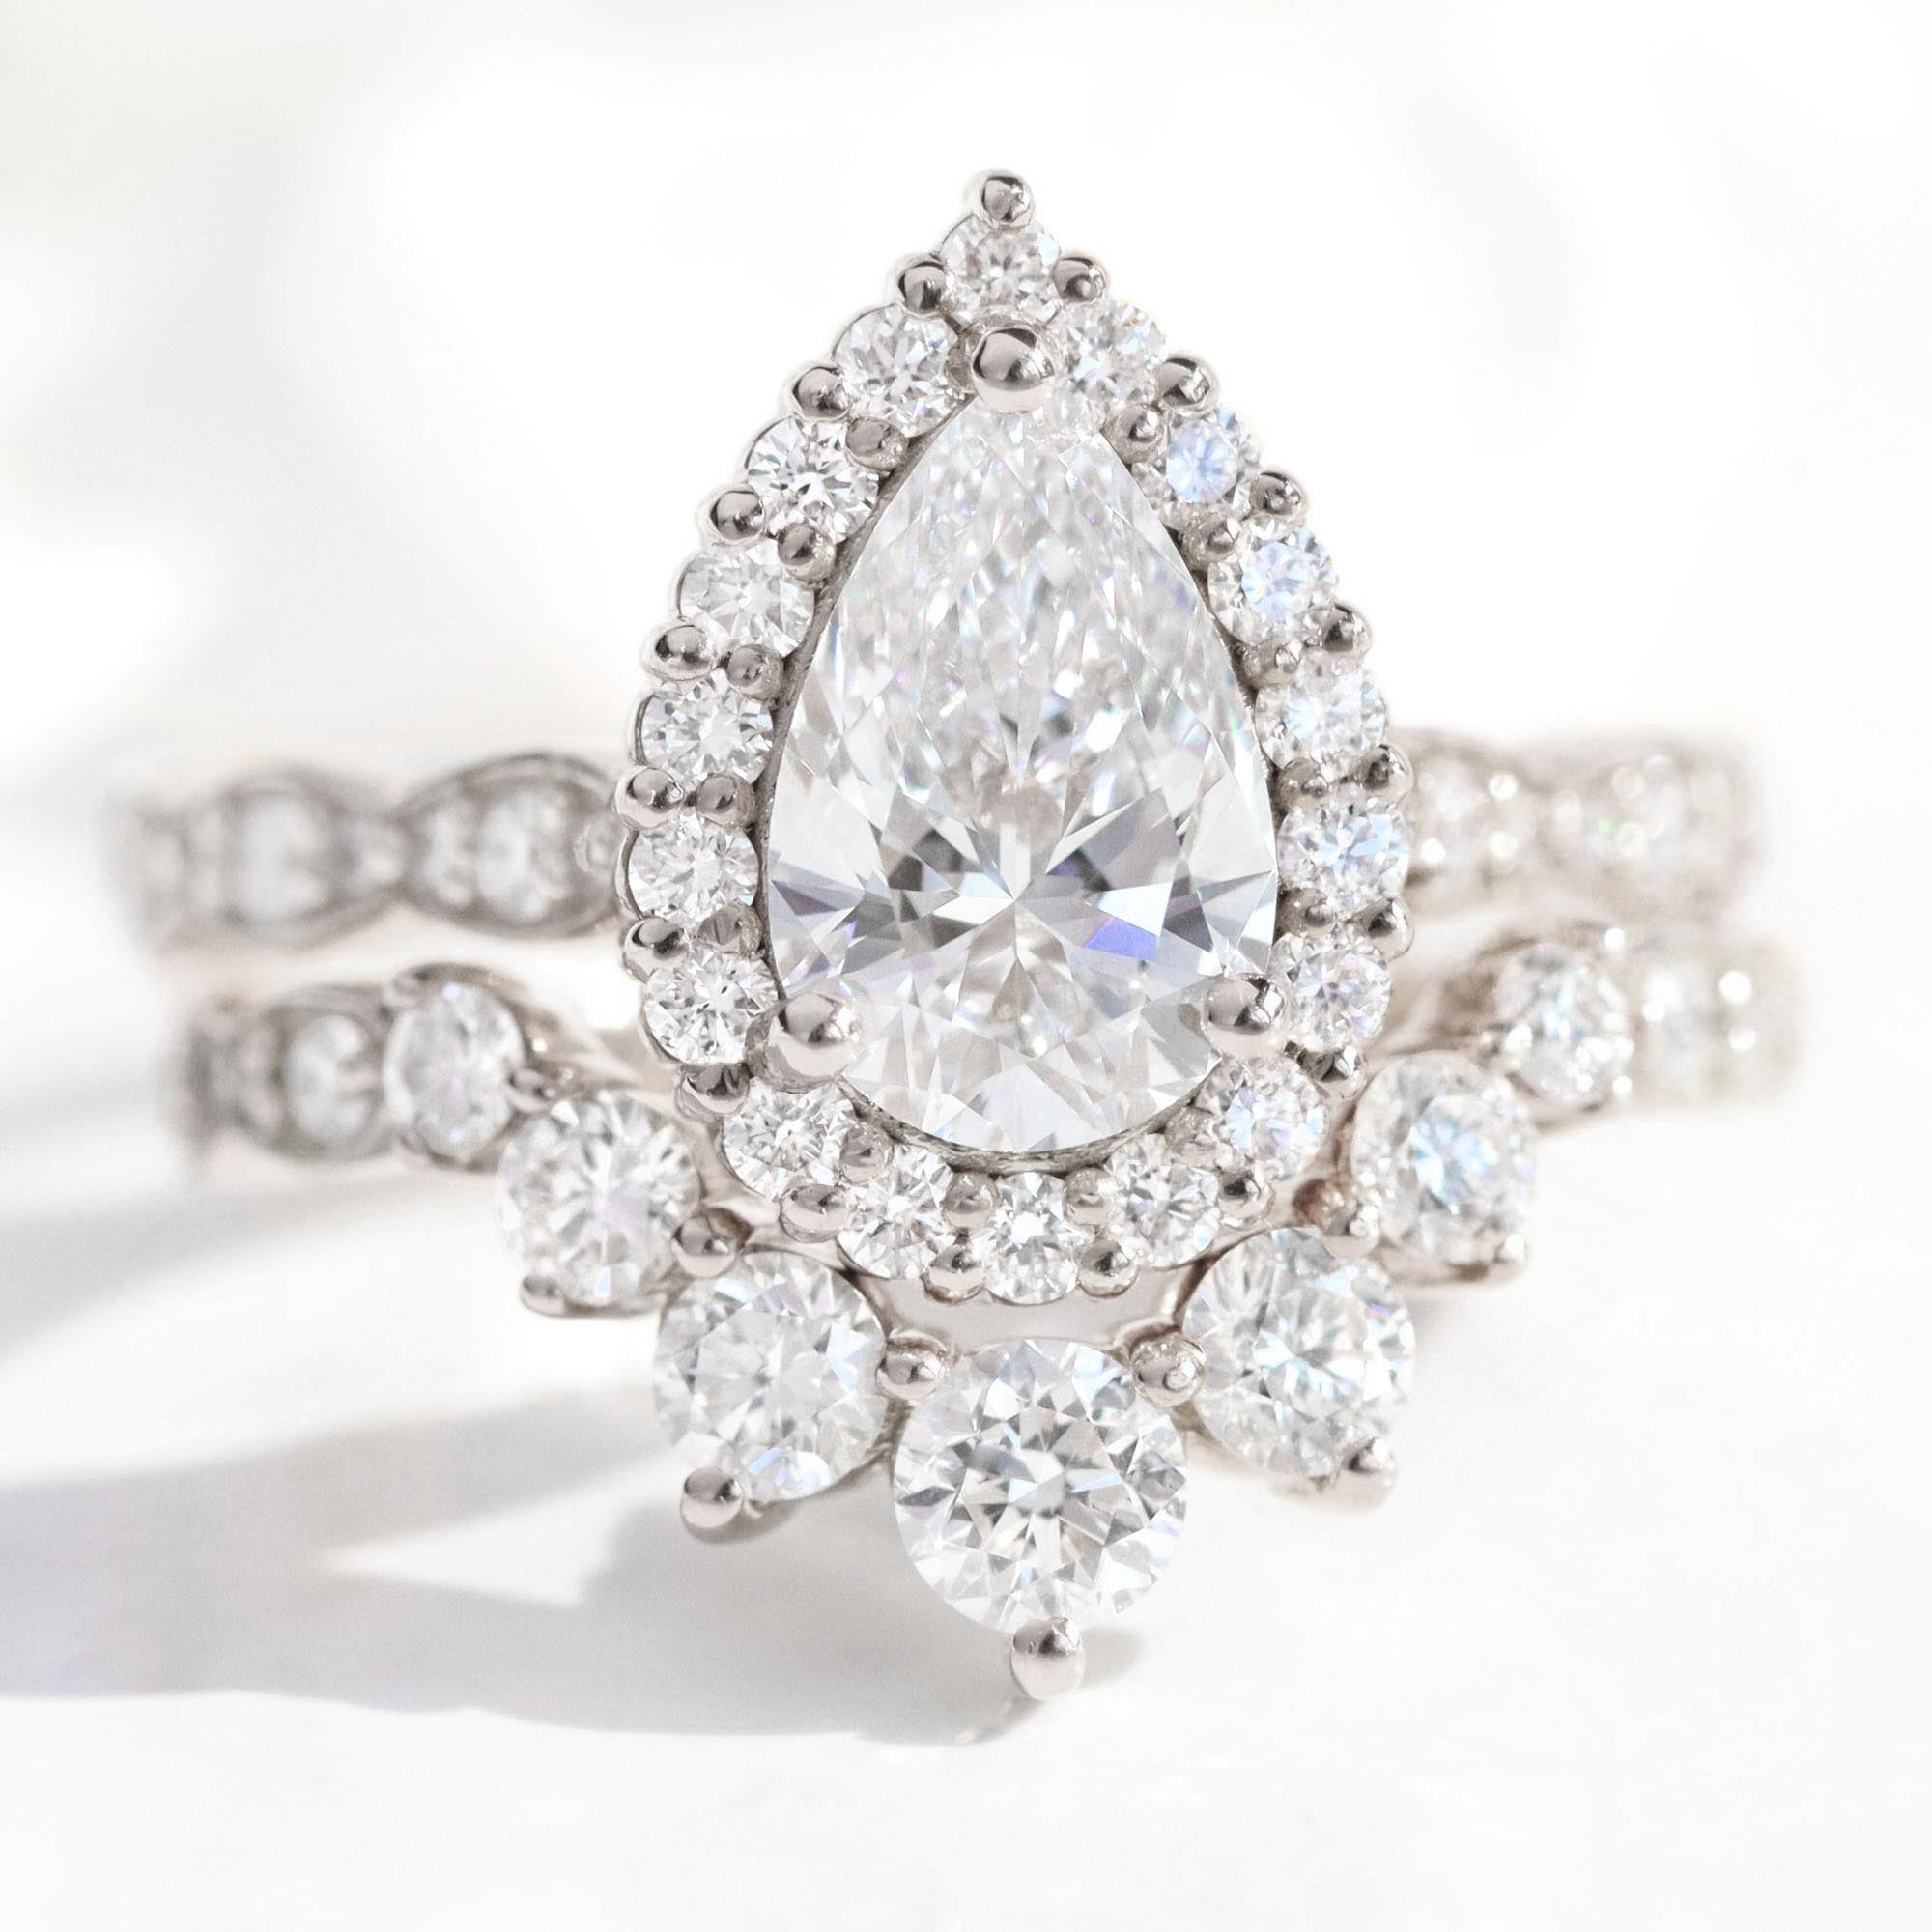 lab diamond ring stack white gold halo pear diamond engagement ring set La More Design Jewelry